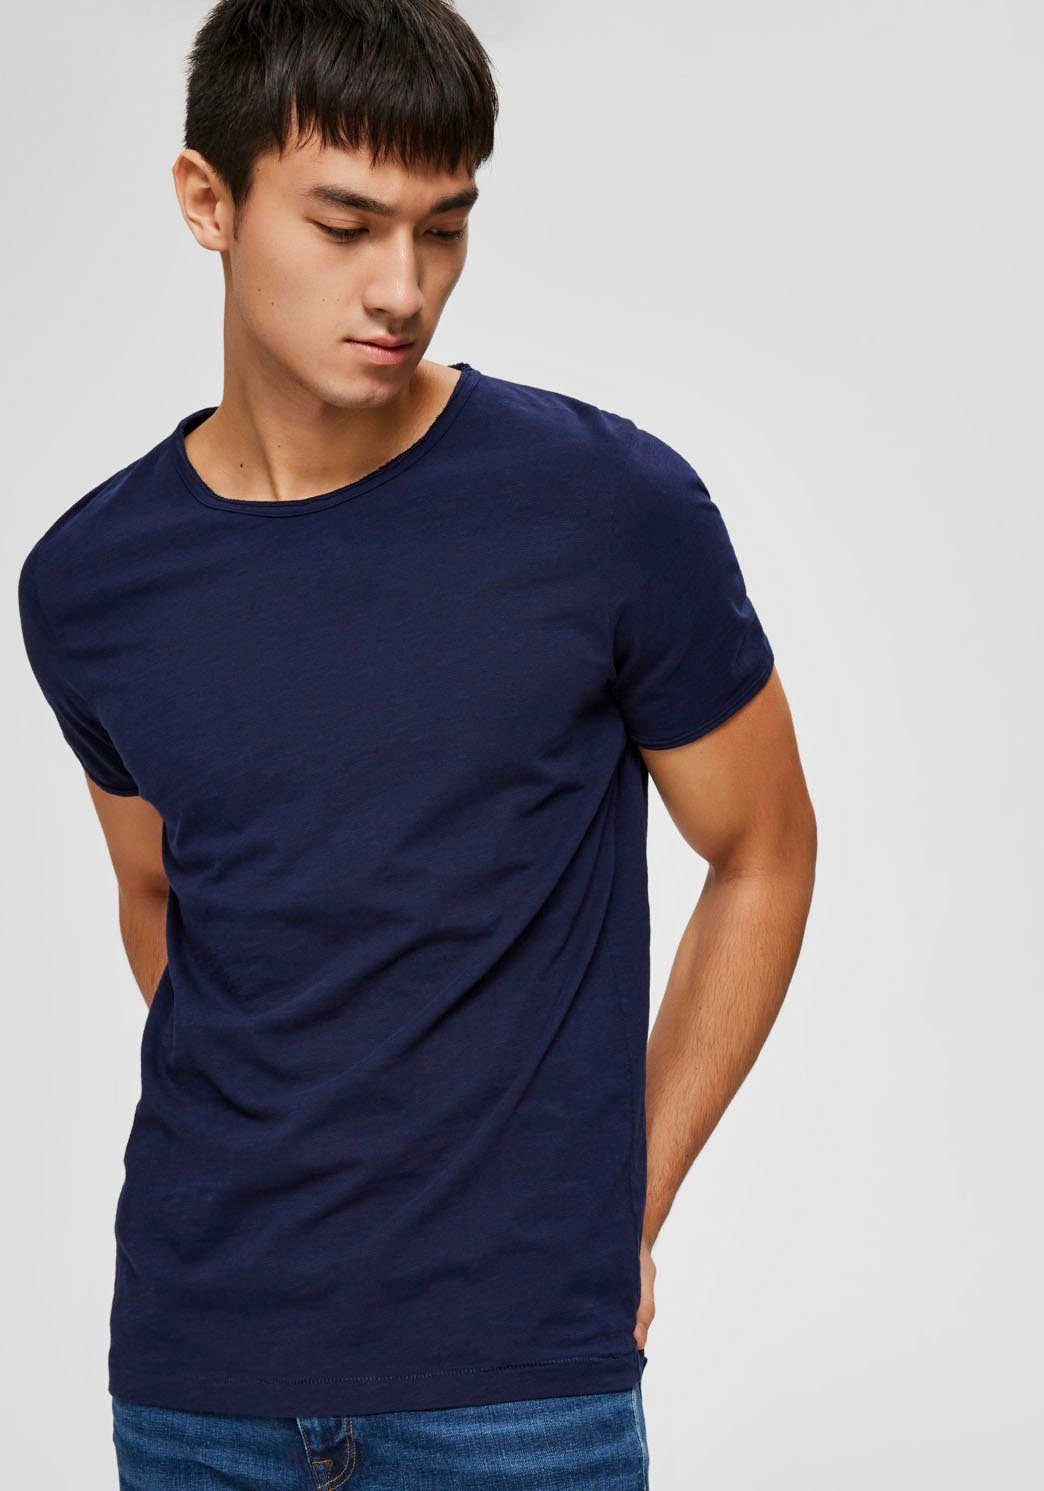 Blue MORGAN SELECTED HOMME Maritime O-NECK T-Shirt TEE